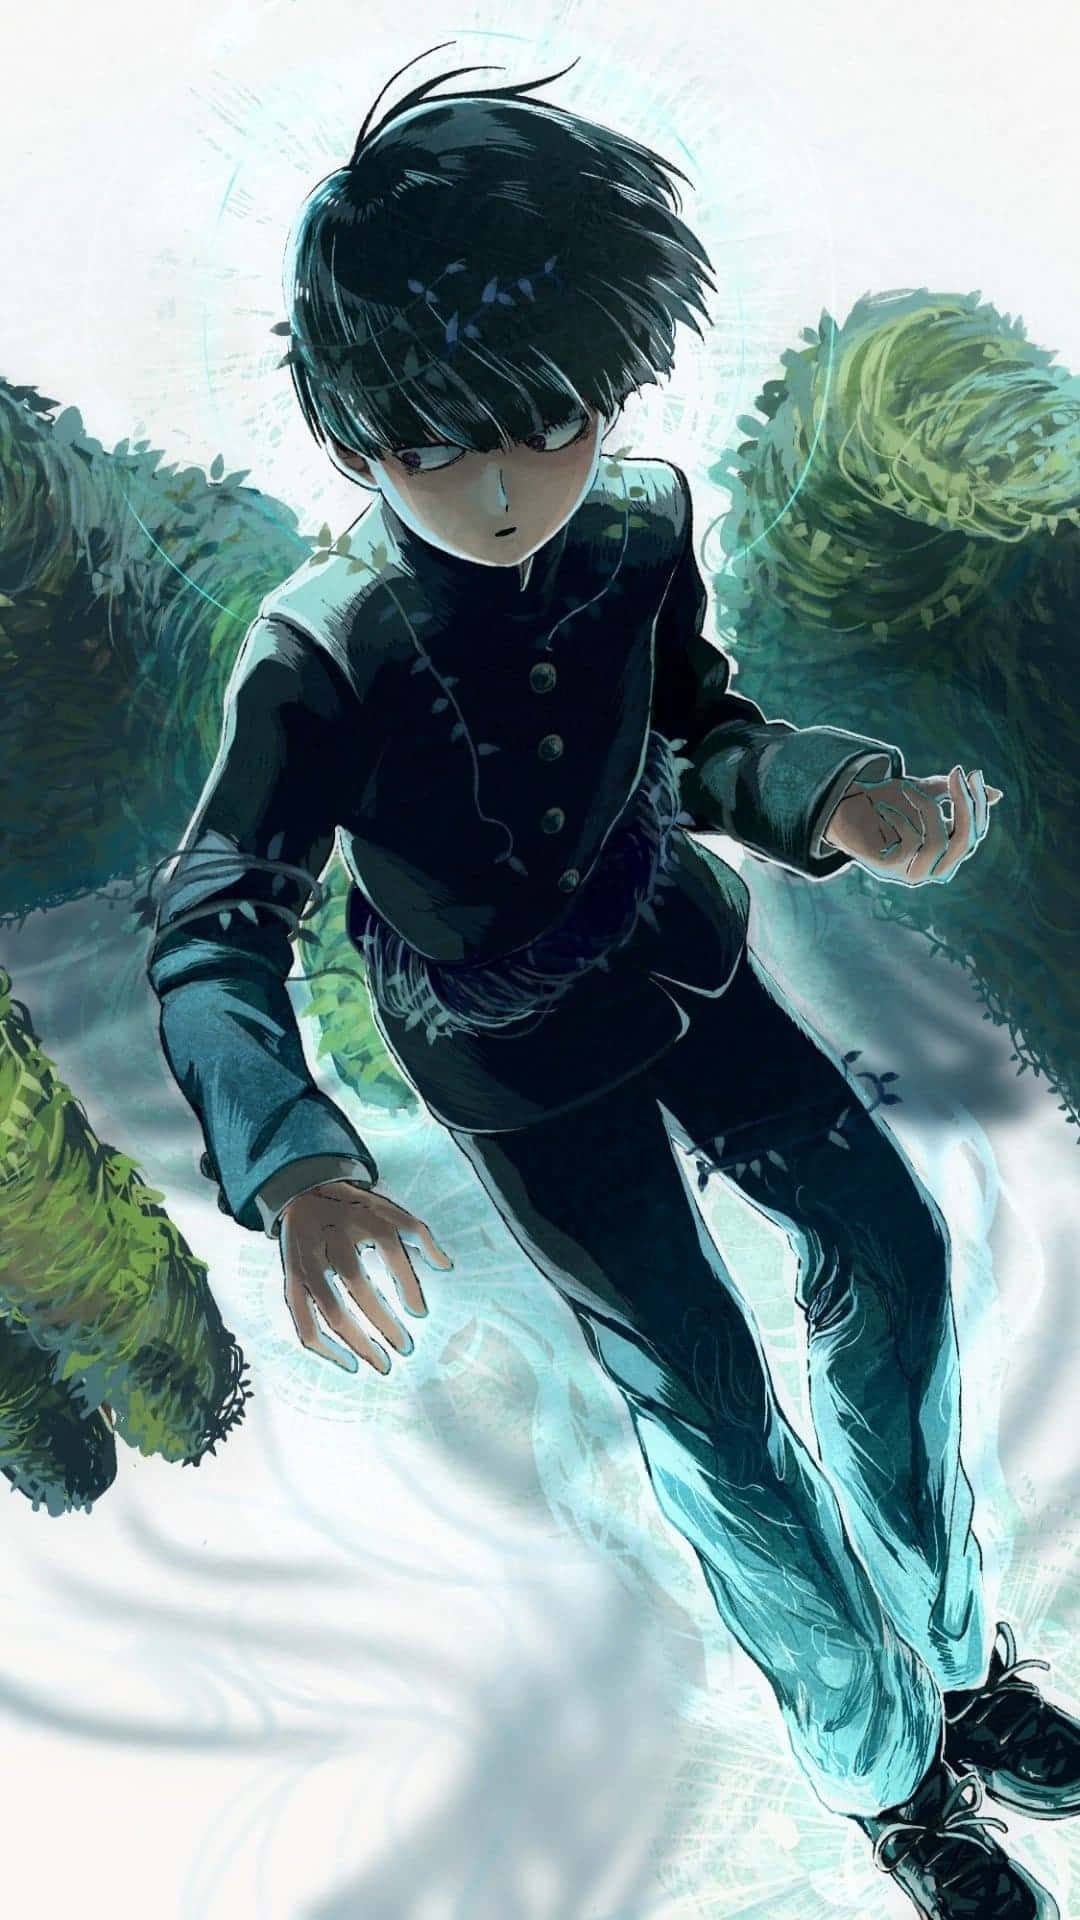 Intimidating Glare from Horror Anime Boy Wallpaper